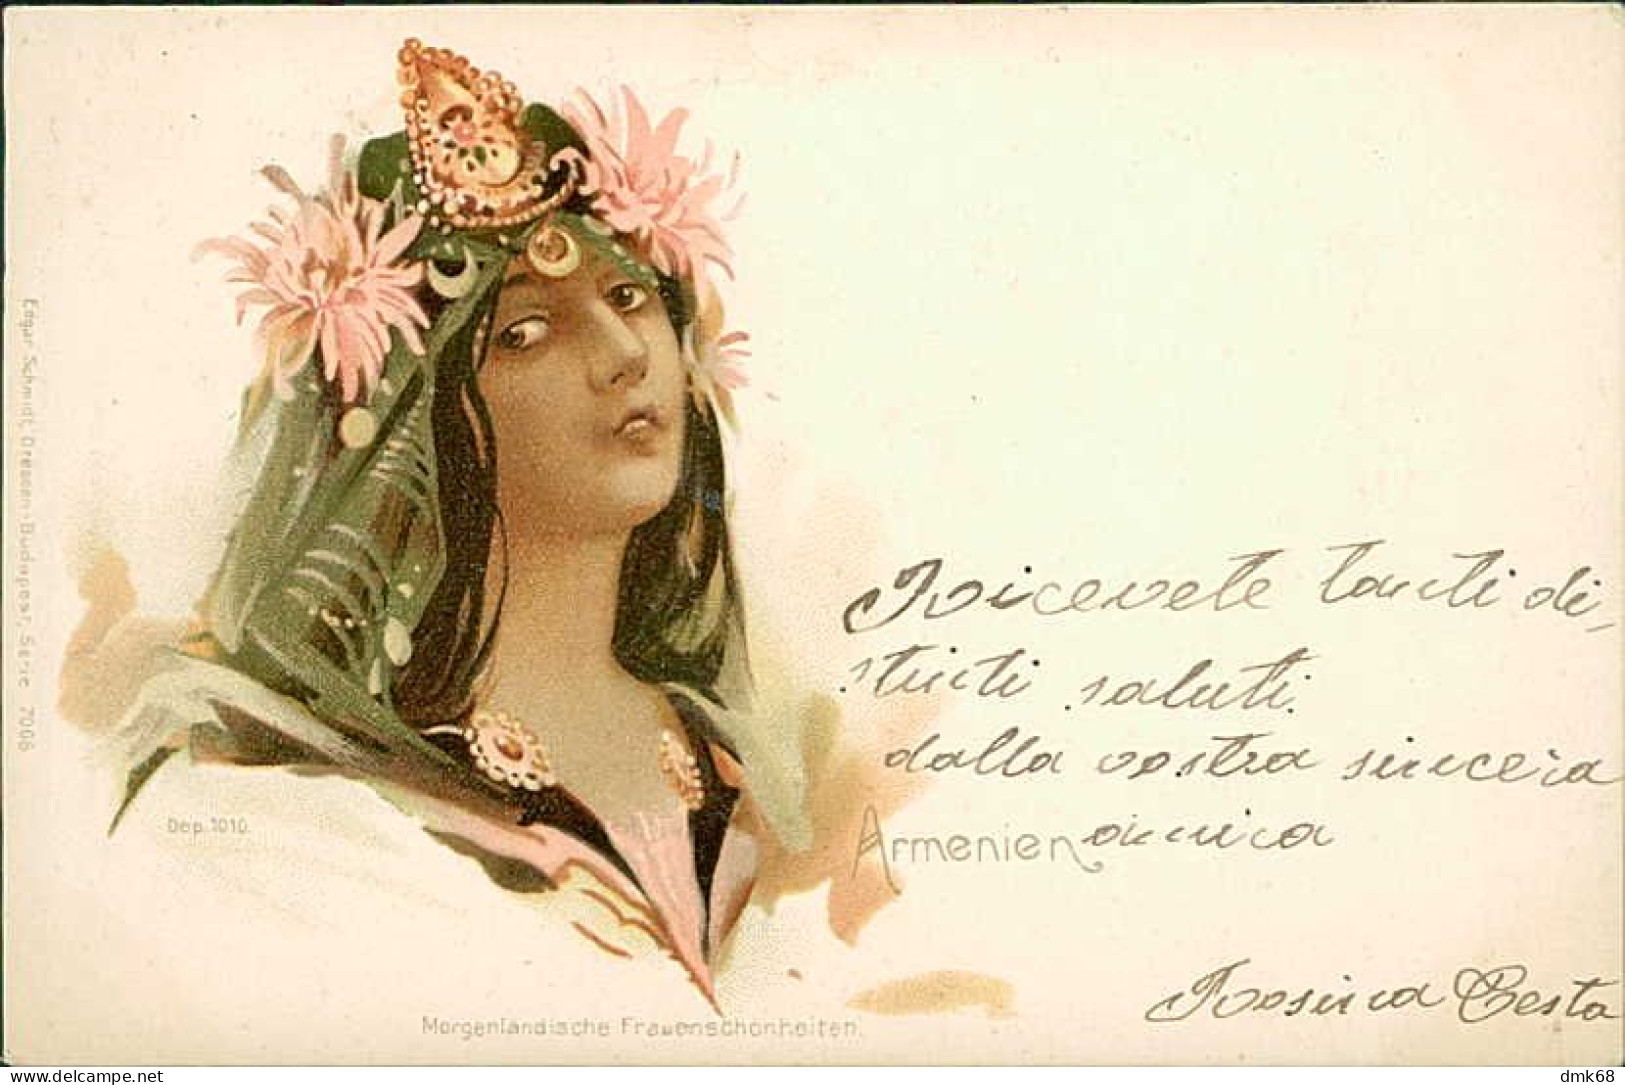 ARMENIA - ARMENIEN - ORIENTAL FEMALE BEAUTY - EDIT. EDGAR SCHMITT - MAILED 1900 (18169) - Armenia